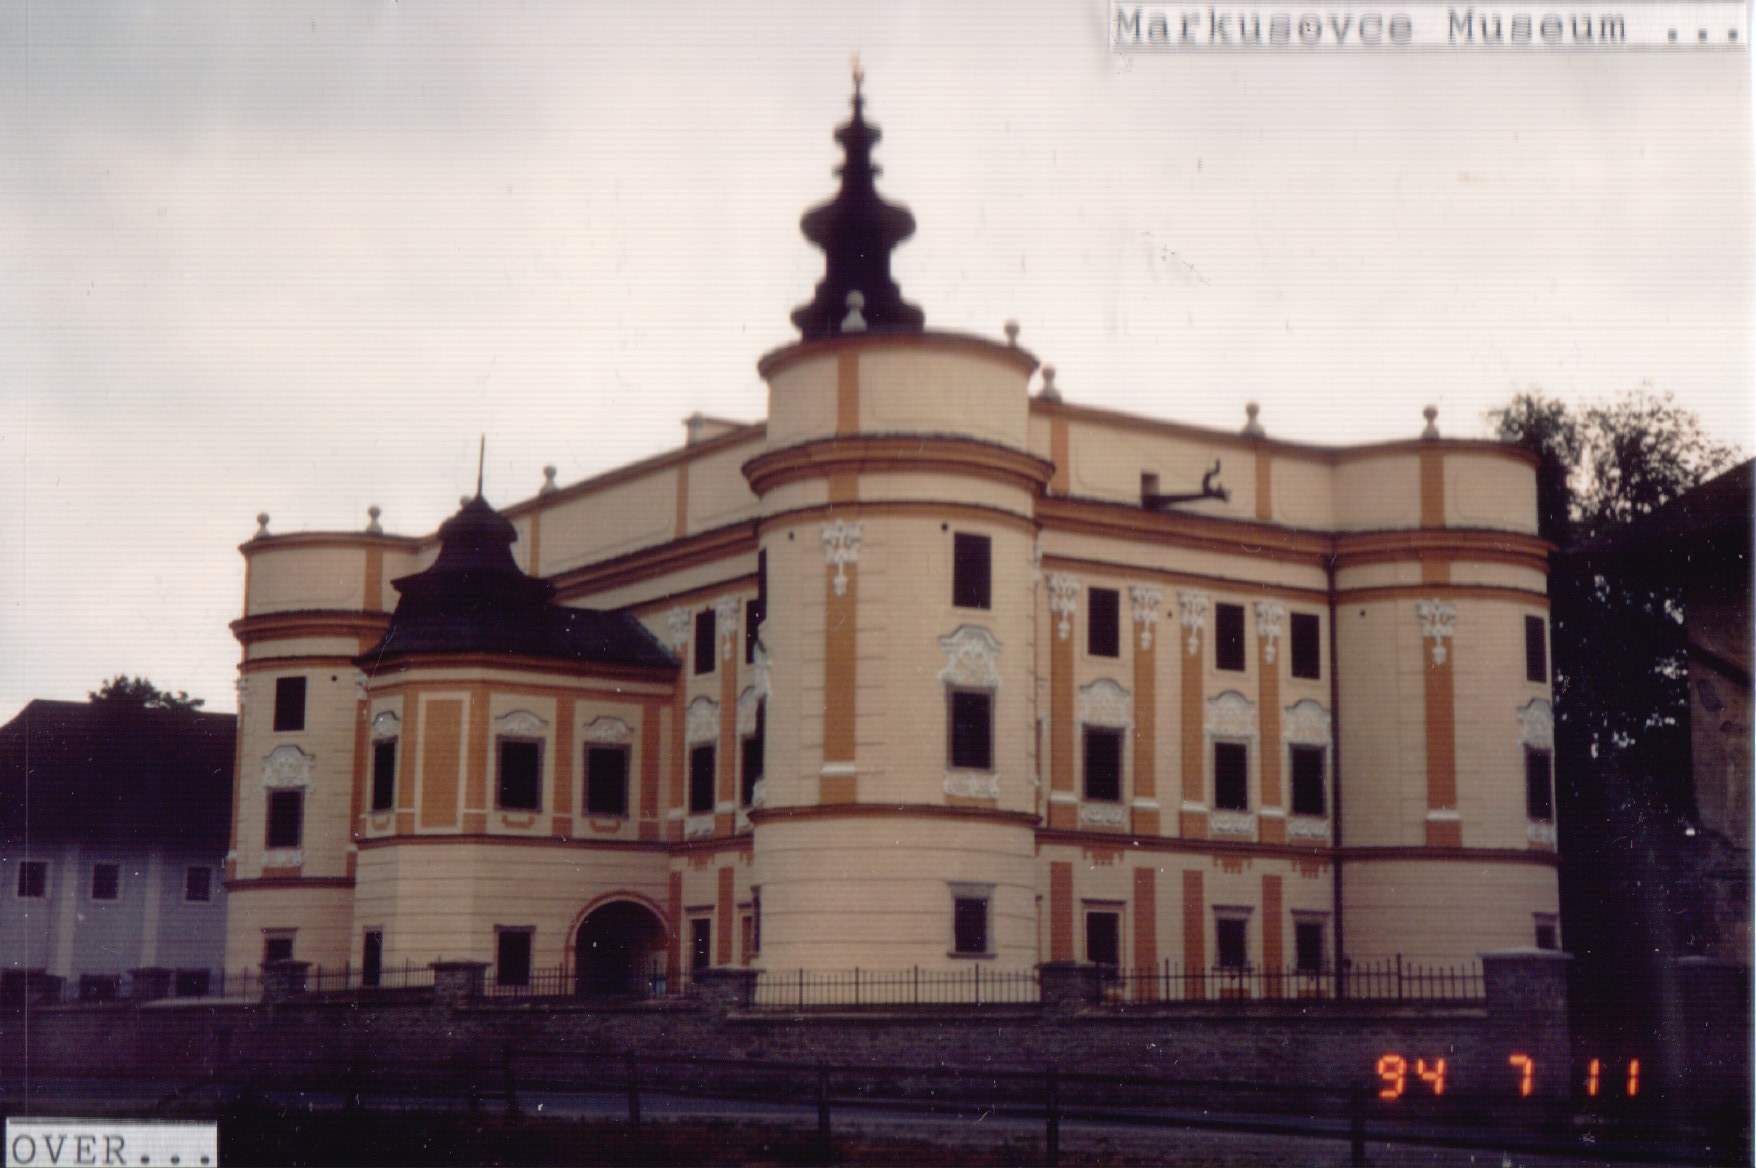 Markusovce Museum